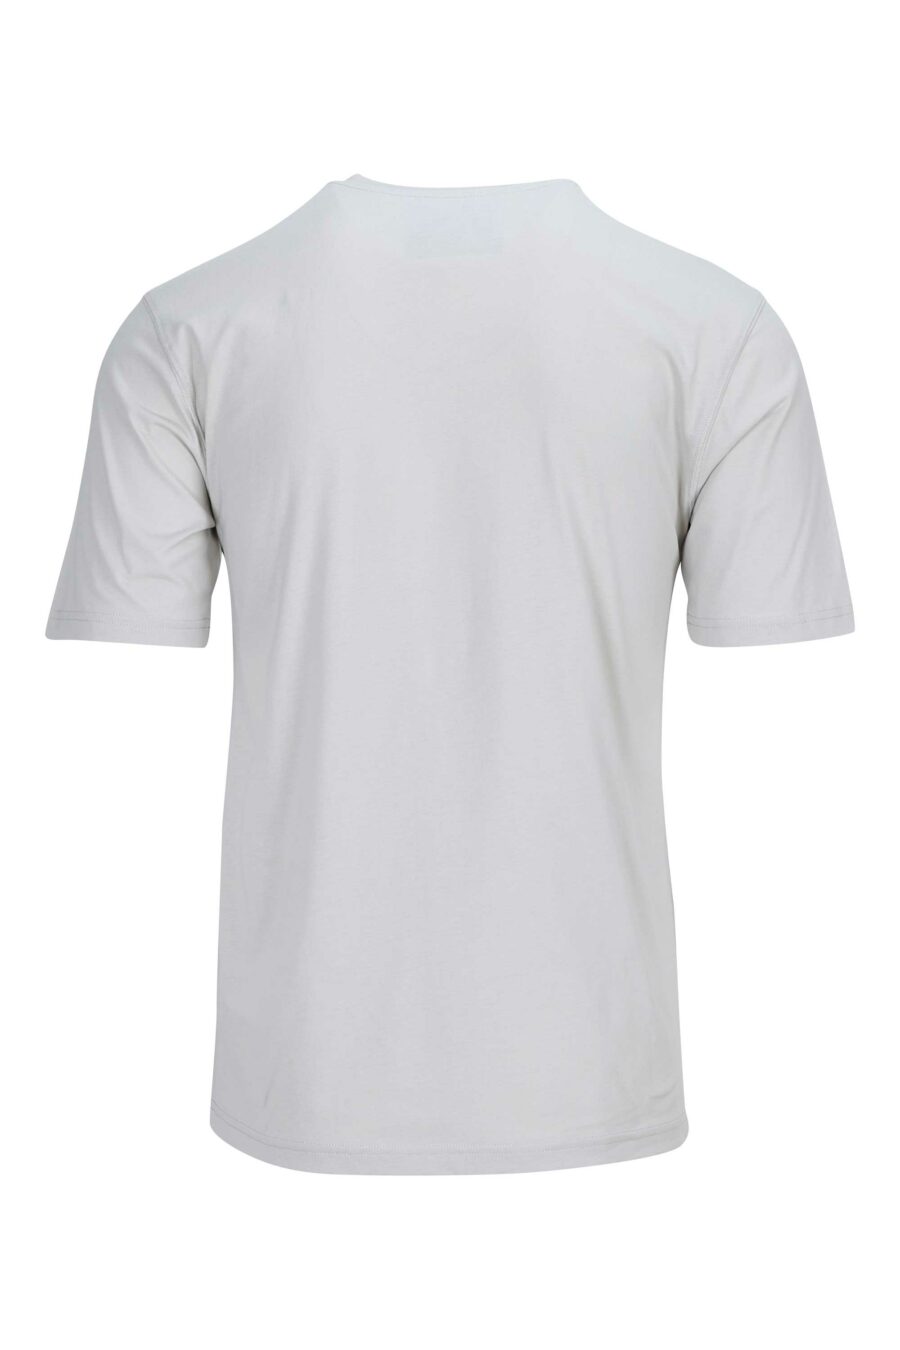 Camiseta gris con maxilogo "Moschino" billete - 889316954807 1